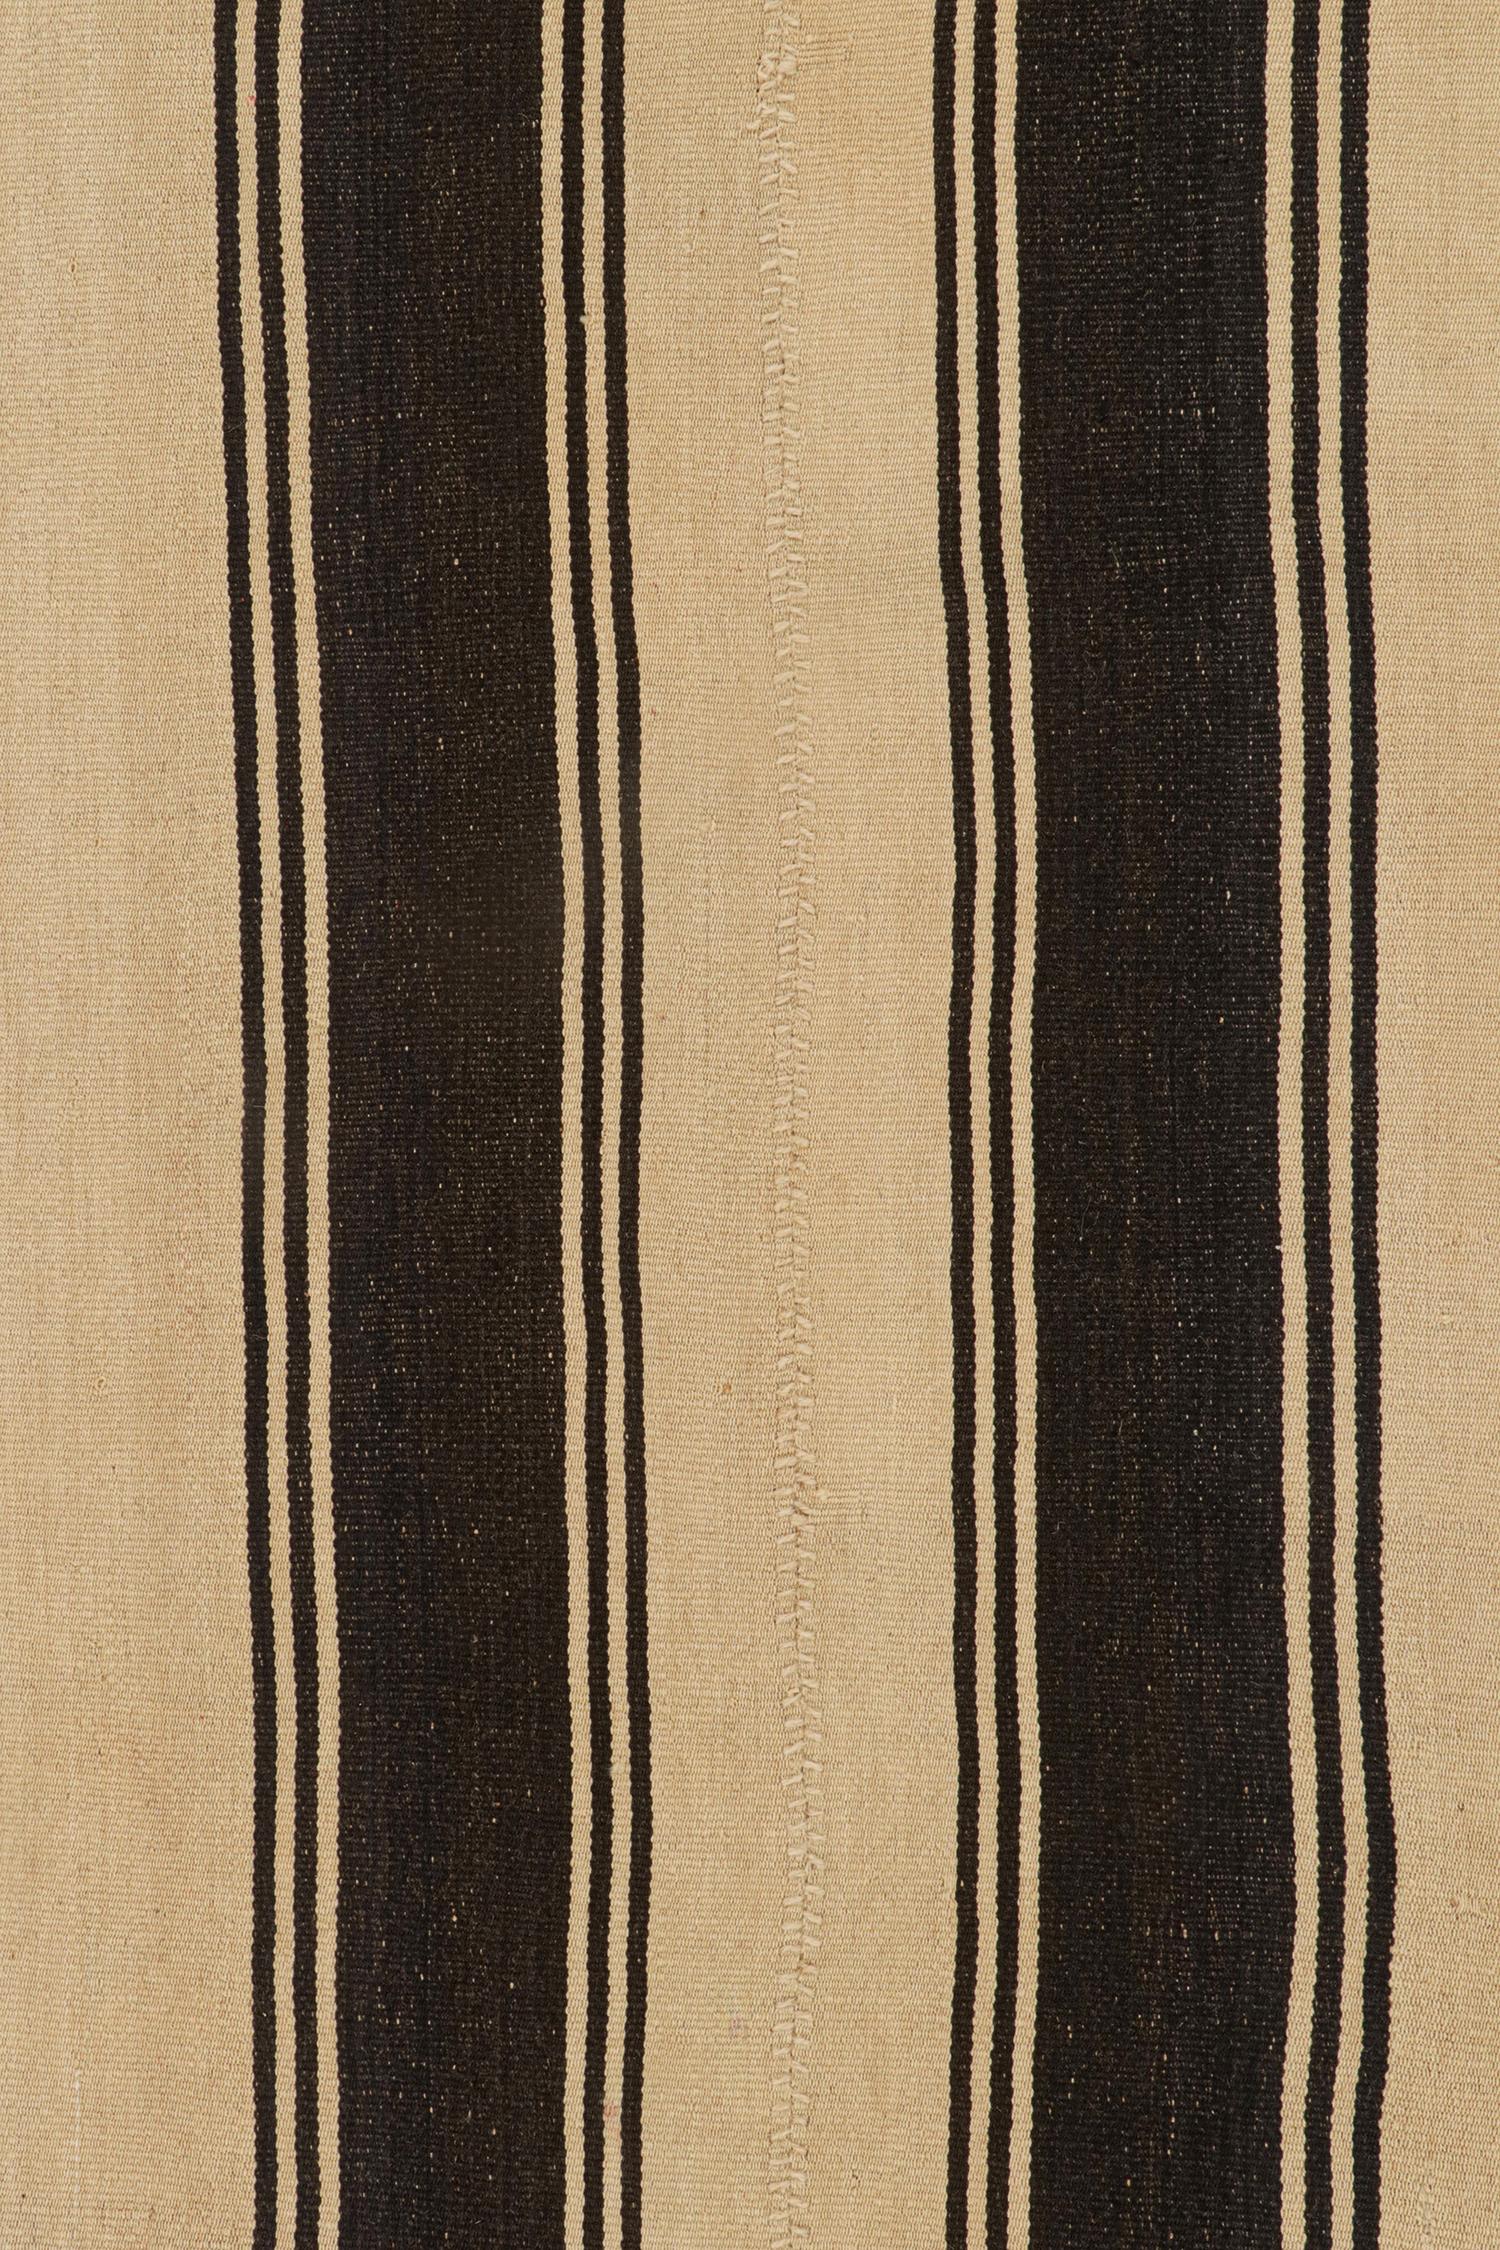 Wool Vintage Persian Kilim in Beige with Black Stripes by Rug & Kilim For Sale